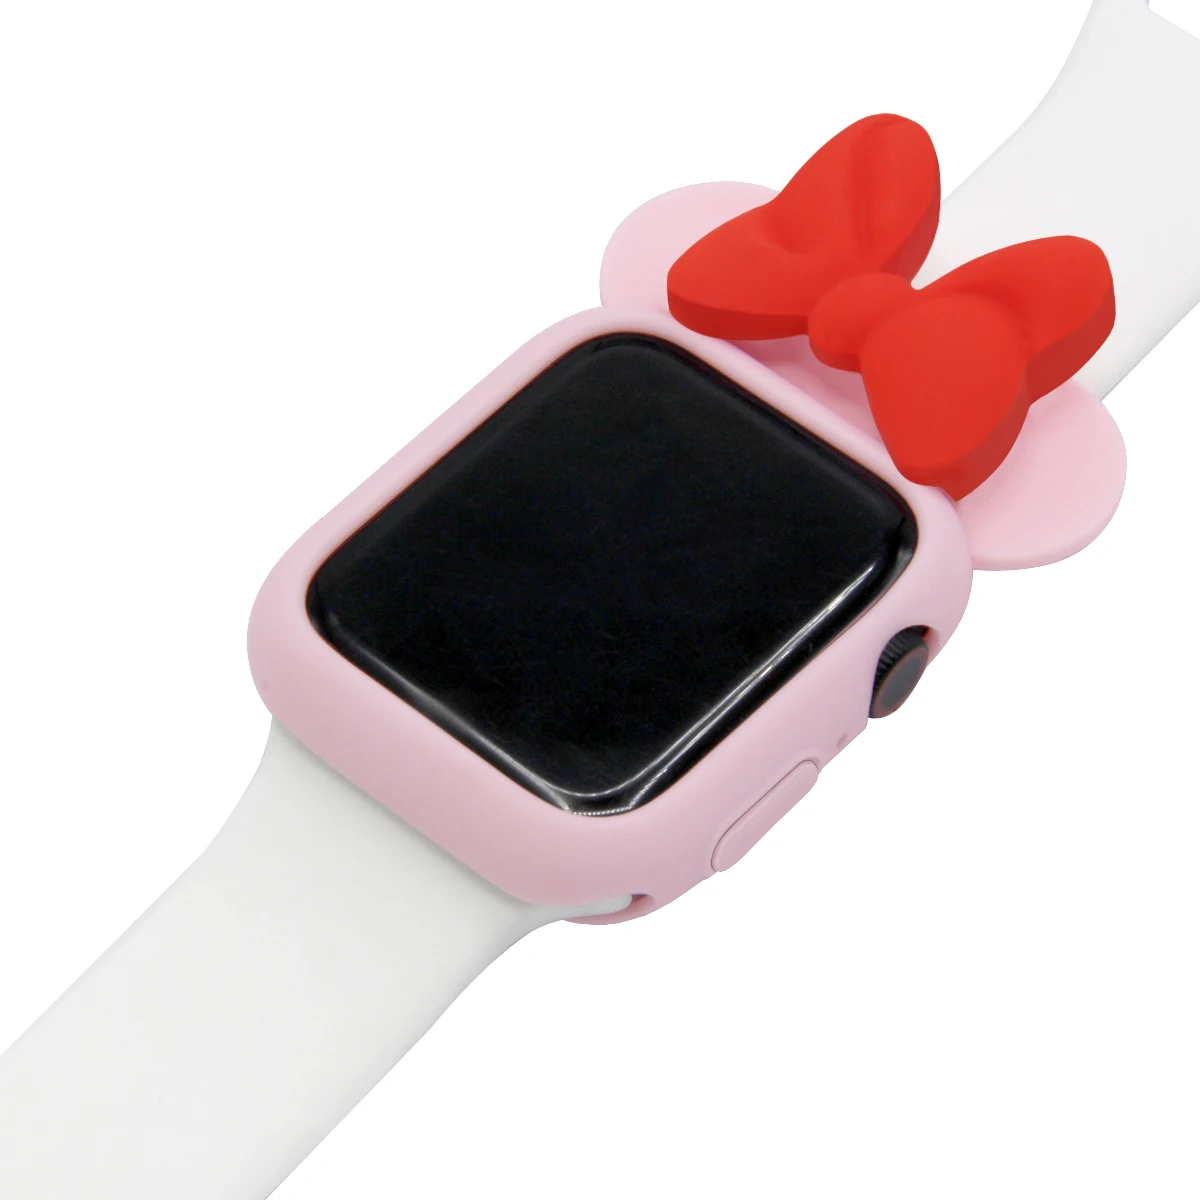 Чехол Serilabee MI NI для apple watch 4, 5, 3, 2, 1, 40 мм, 44 мм, милый защитный ТПУ чехол s для iwatch series 4, 5, 3, 2, 1